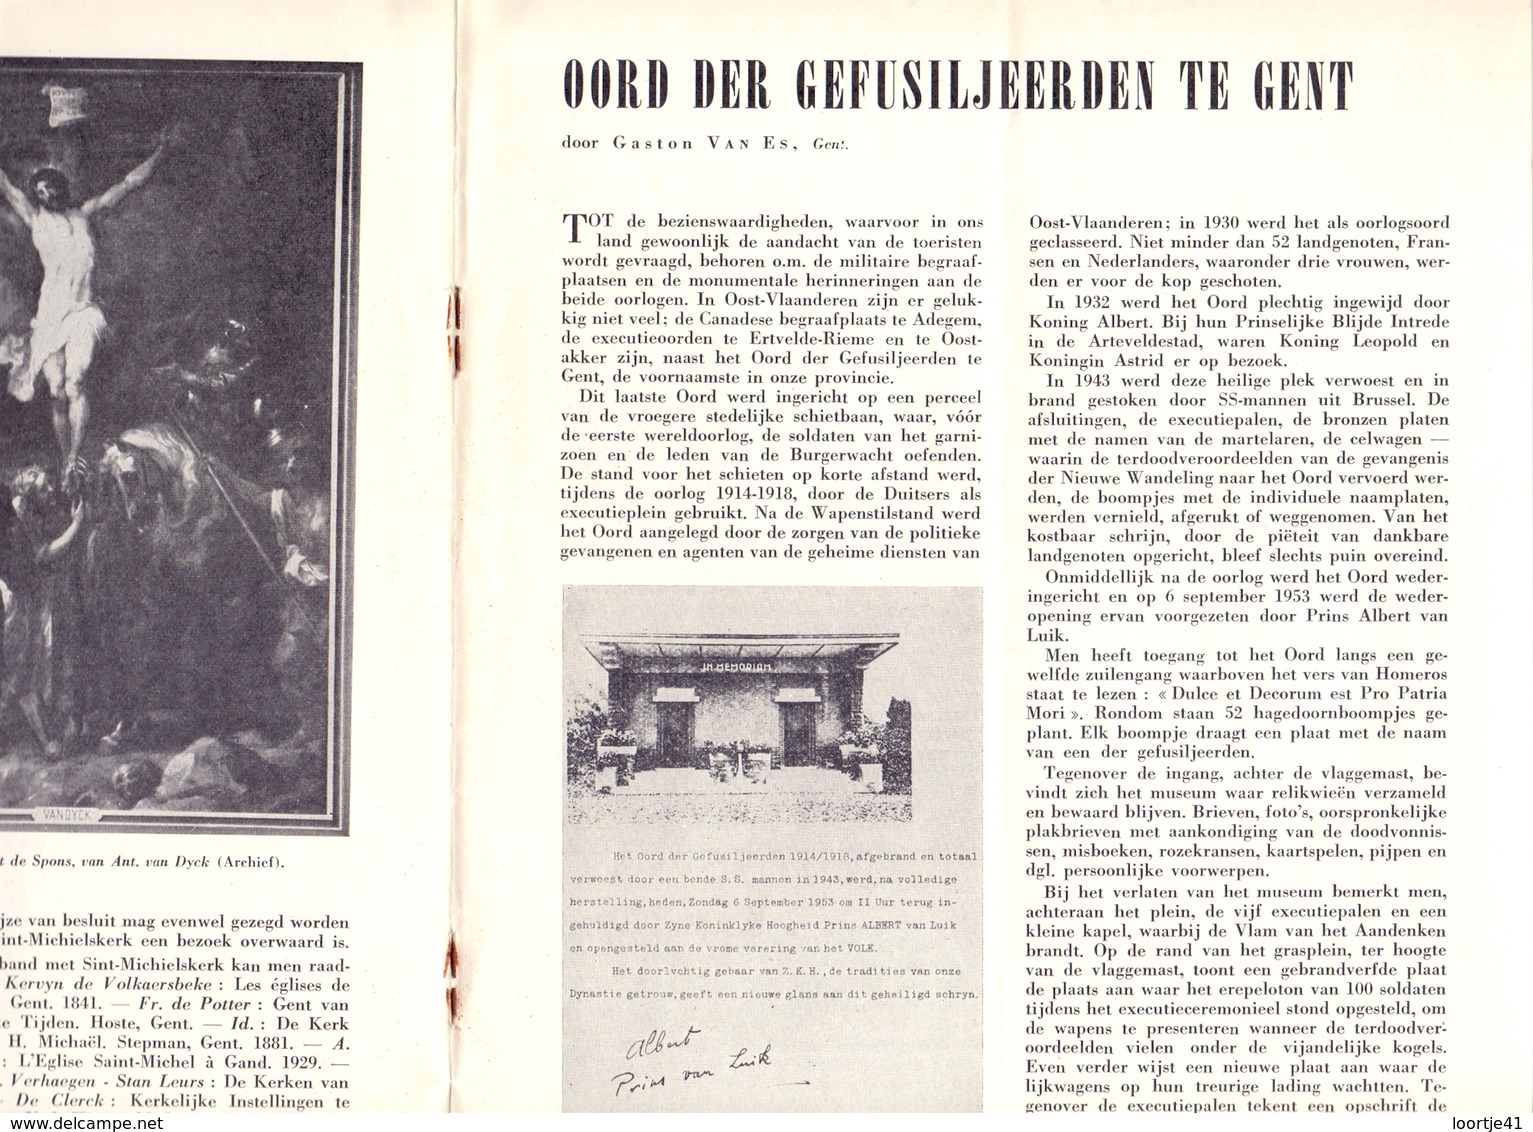 Brochure  Toerisme Tijdschrift - Oost Vlaanderen - Artikels Oa Lokeren, Kruibeke, Gent, Juul Keppens  - 1955 - Dépliants Touristiques